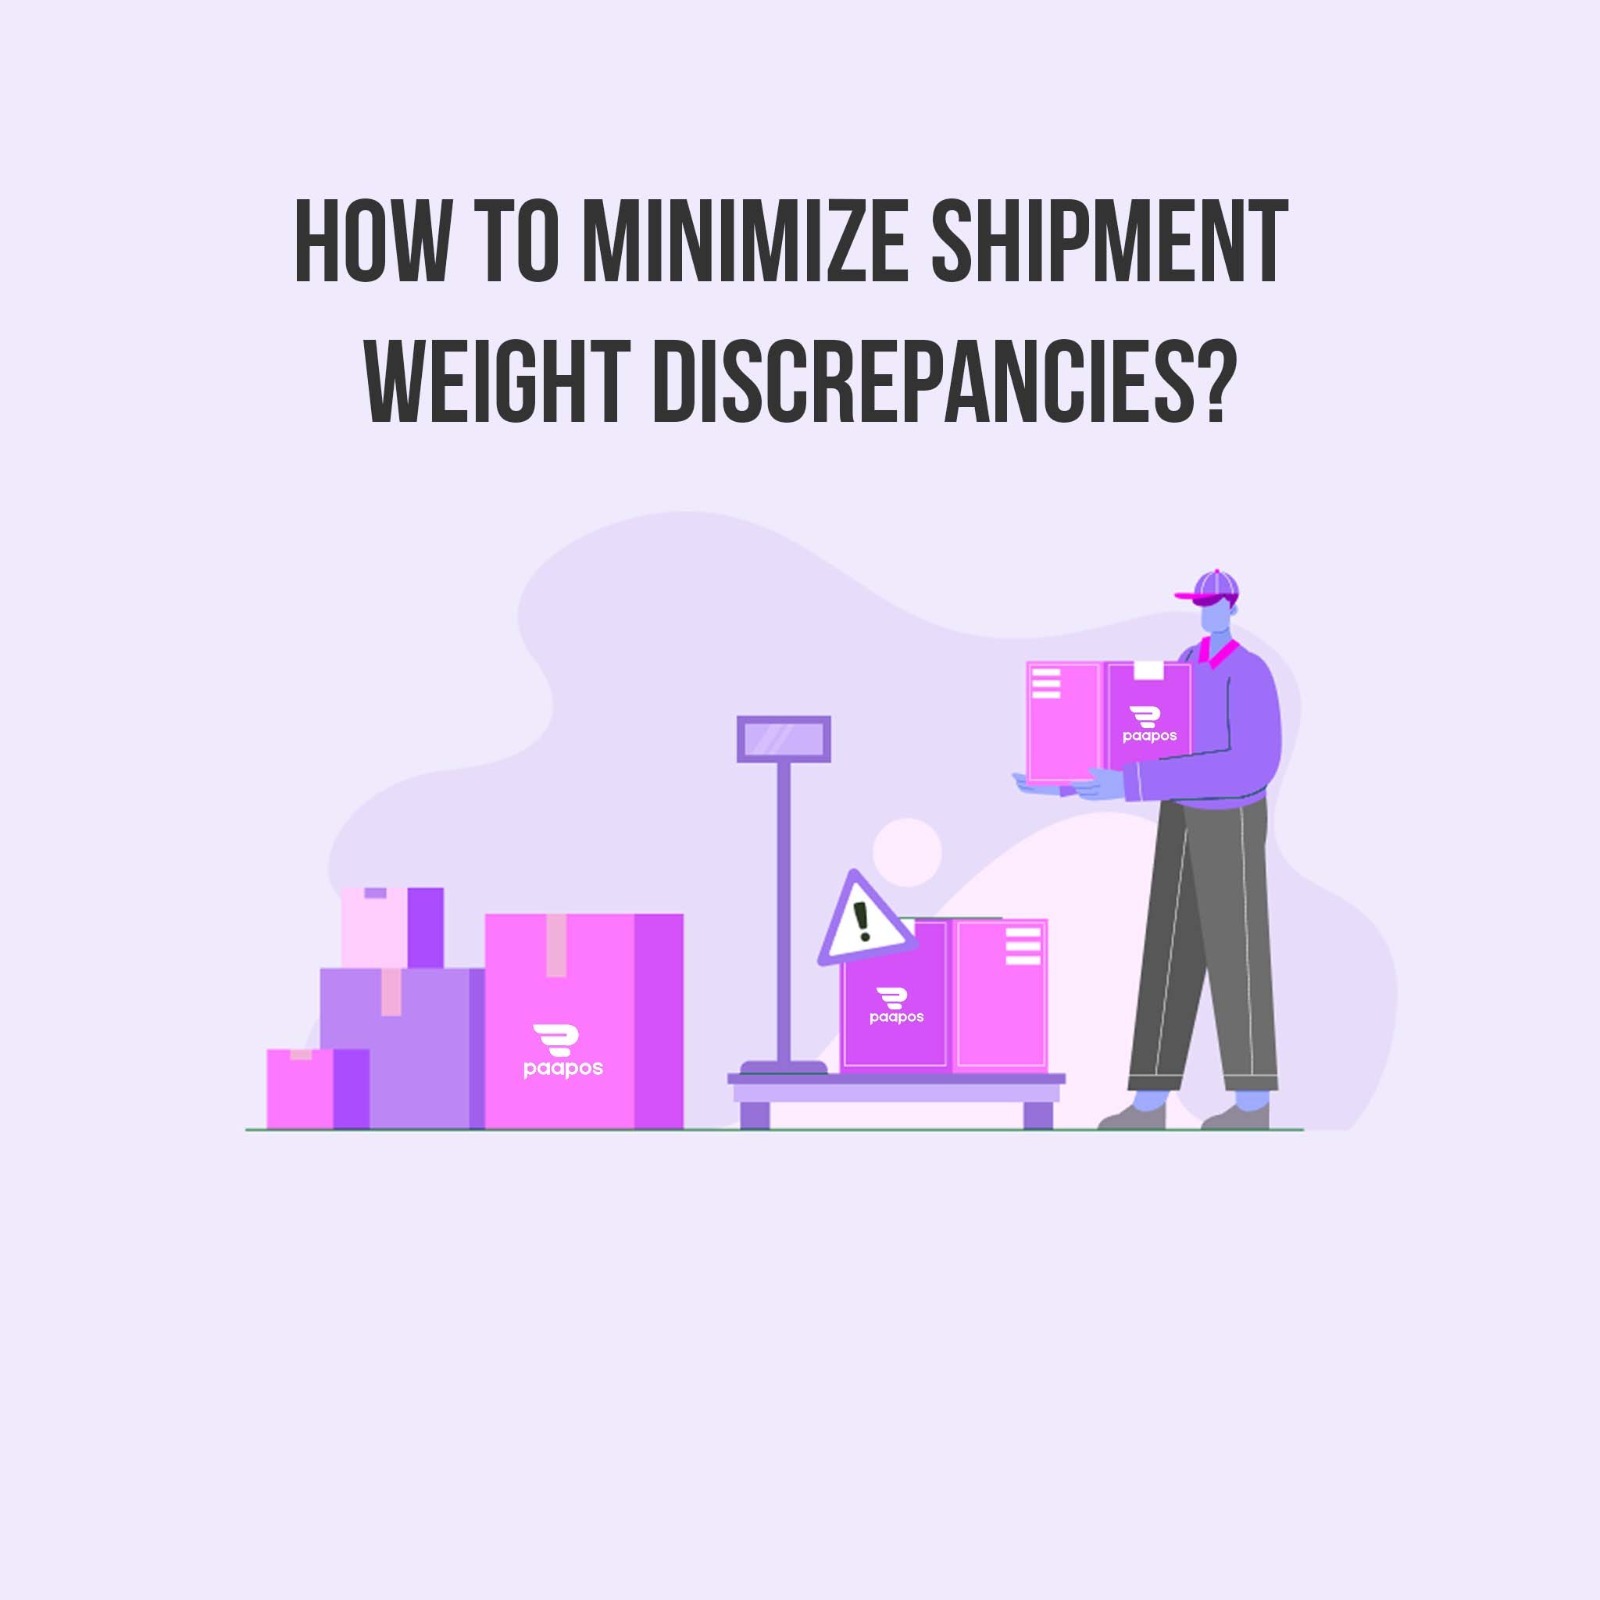 How to Minimize Shipment Weight Discrepancies?